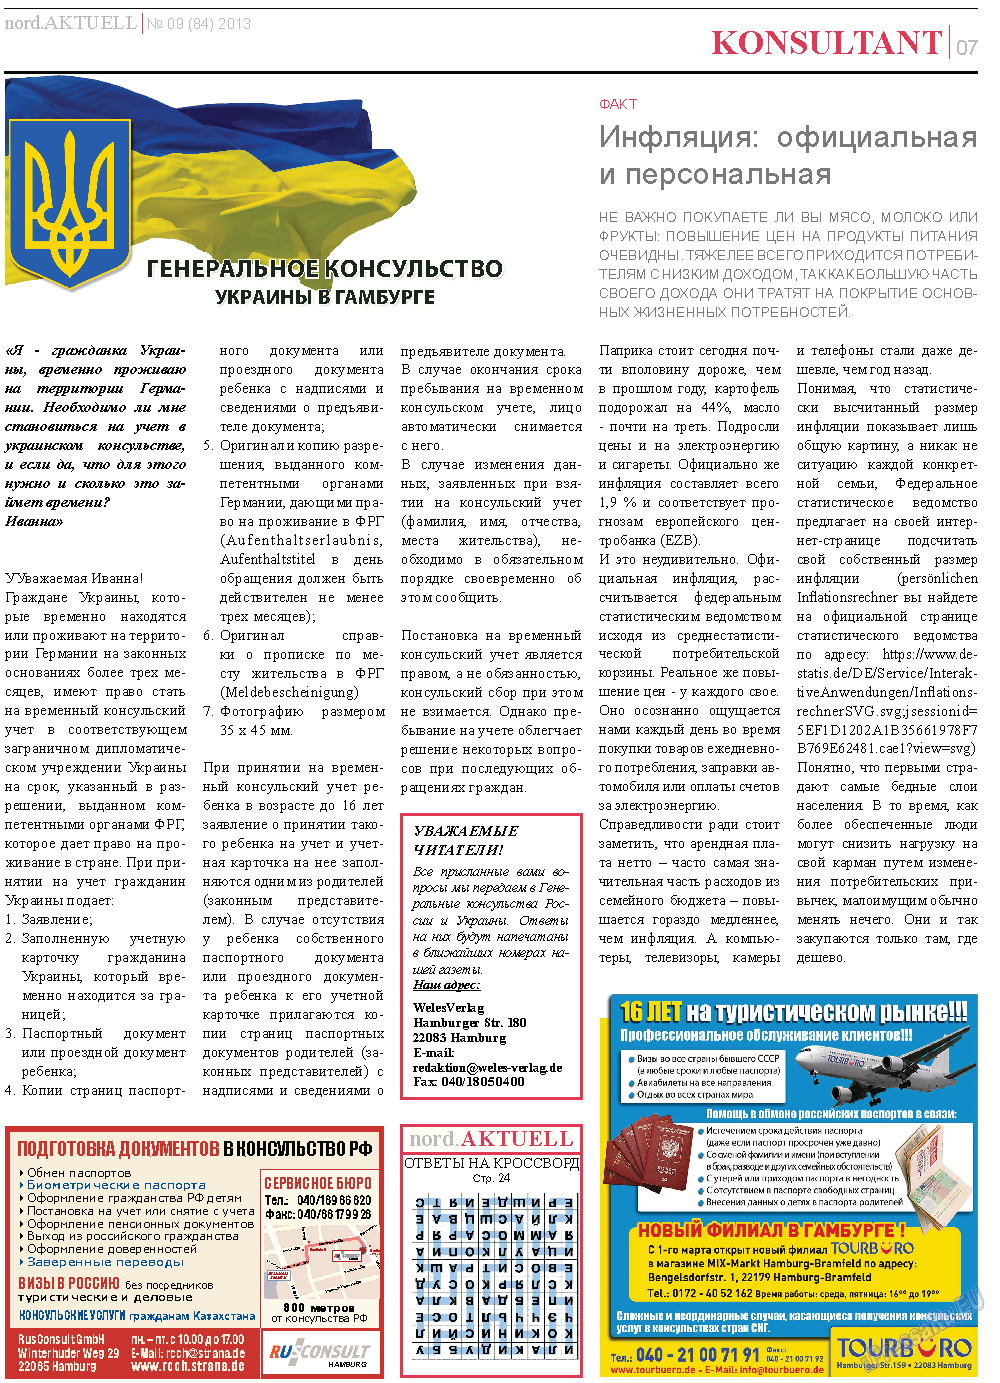 nord.Aktuell, газета. 2013 №9 стр.7